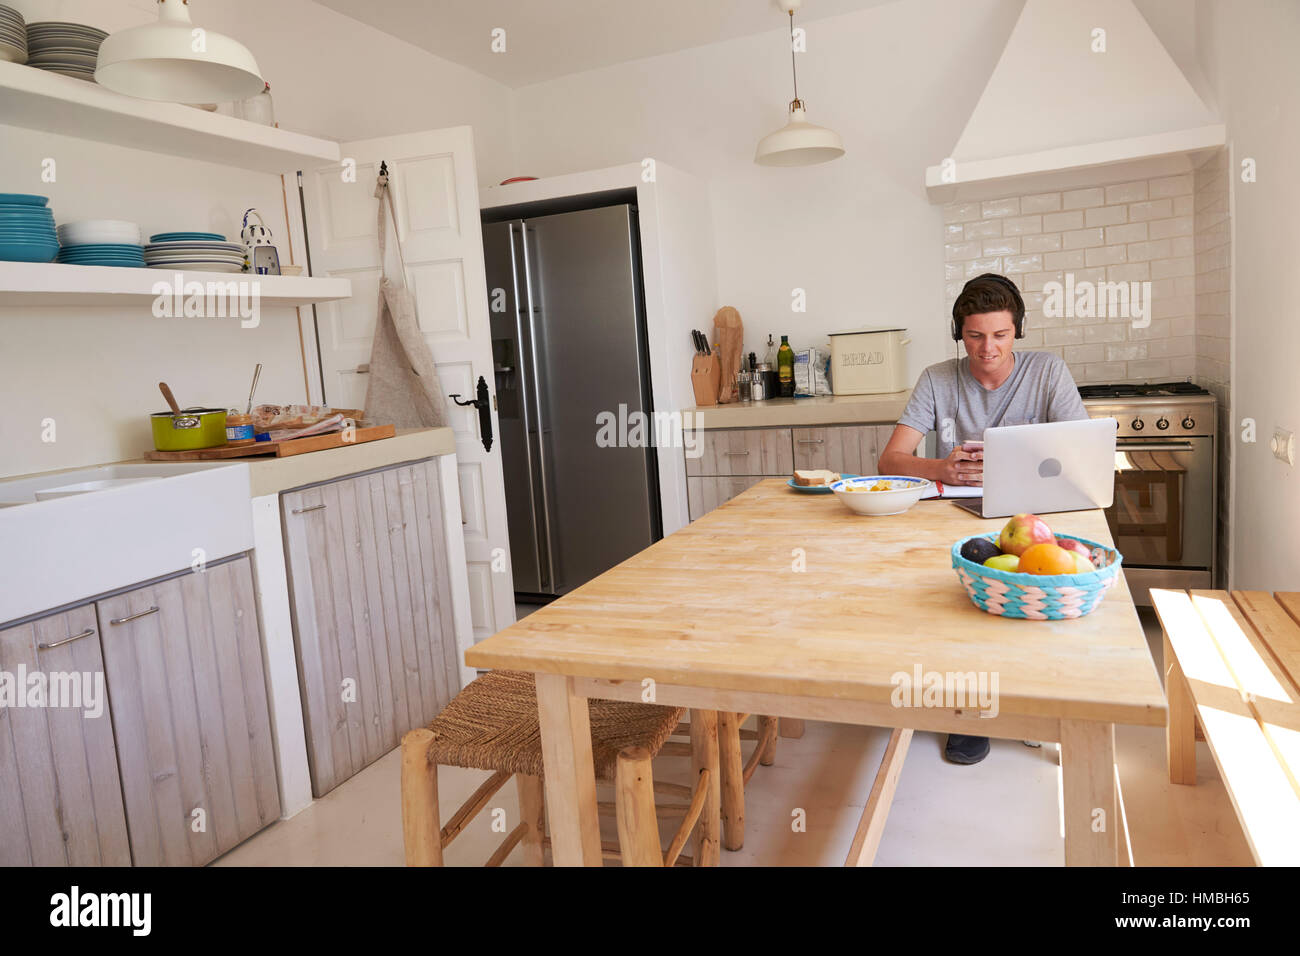 Teenage boy wearing headphones using technology in a kitchen Stock Photo